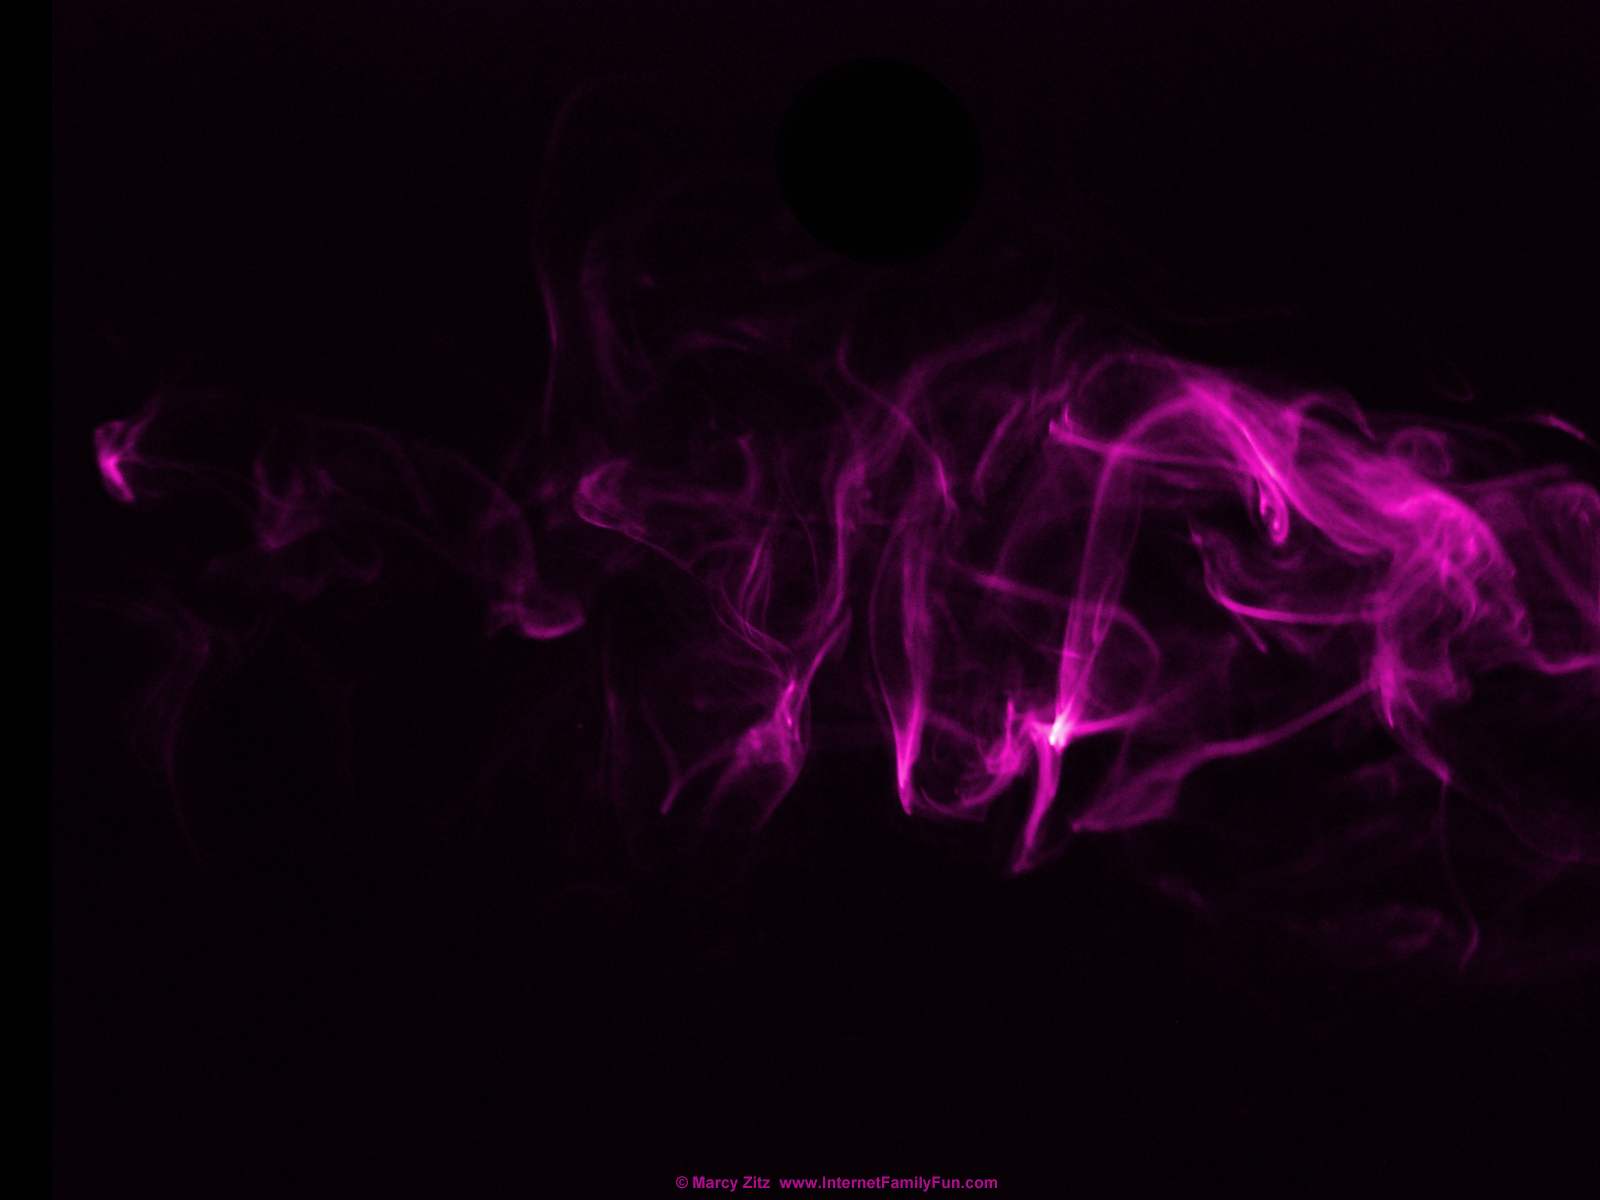 Abstract Smoke in Purple 1 Wallpaper Background for Desktop